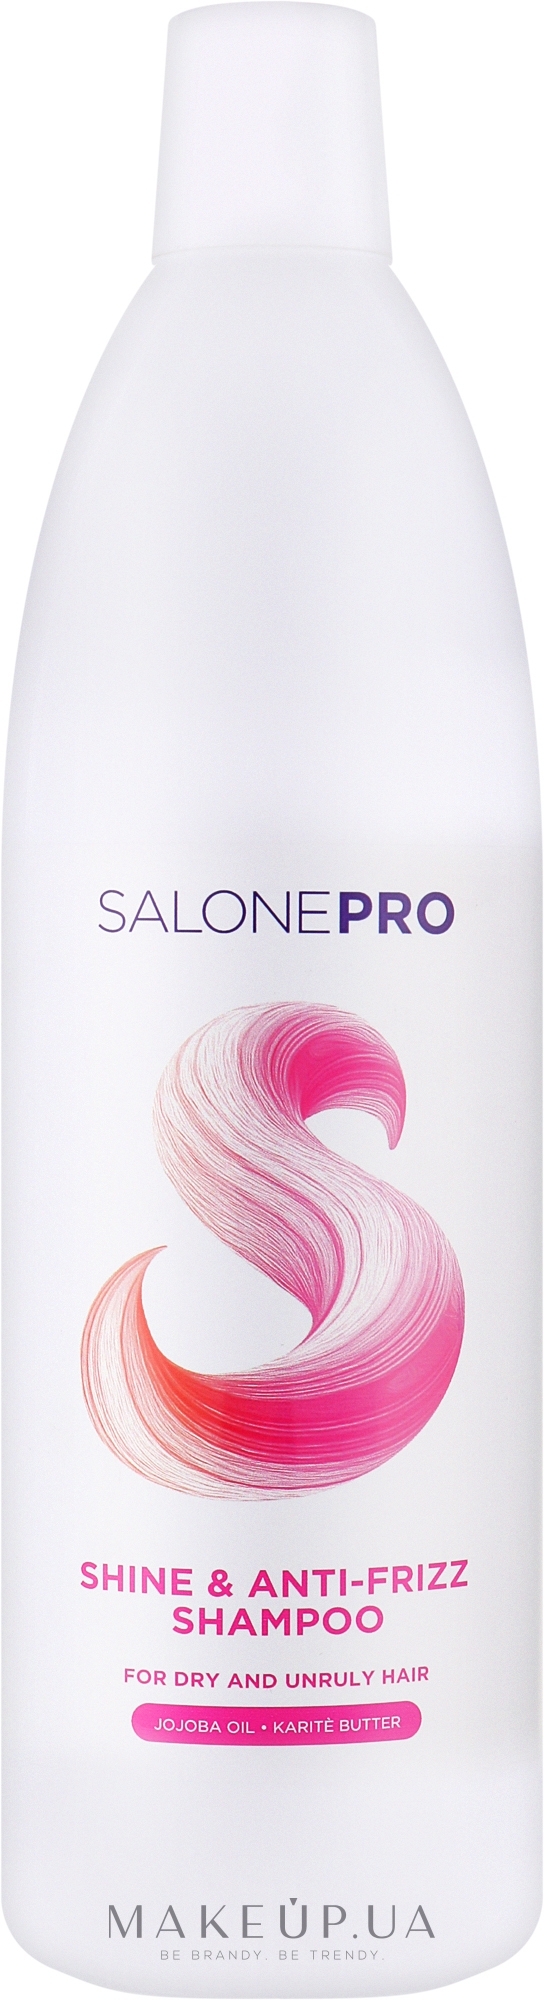 Шампунь для блеска сухих и непослушных волос - Unic Salone Pro Shine & Anti-Frizz Shampoo — фото 1000ml